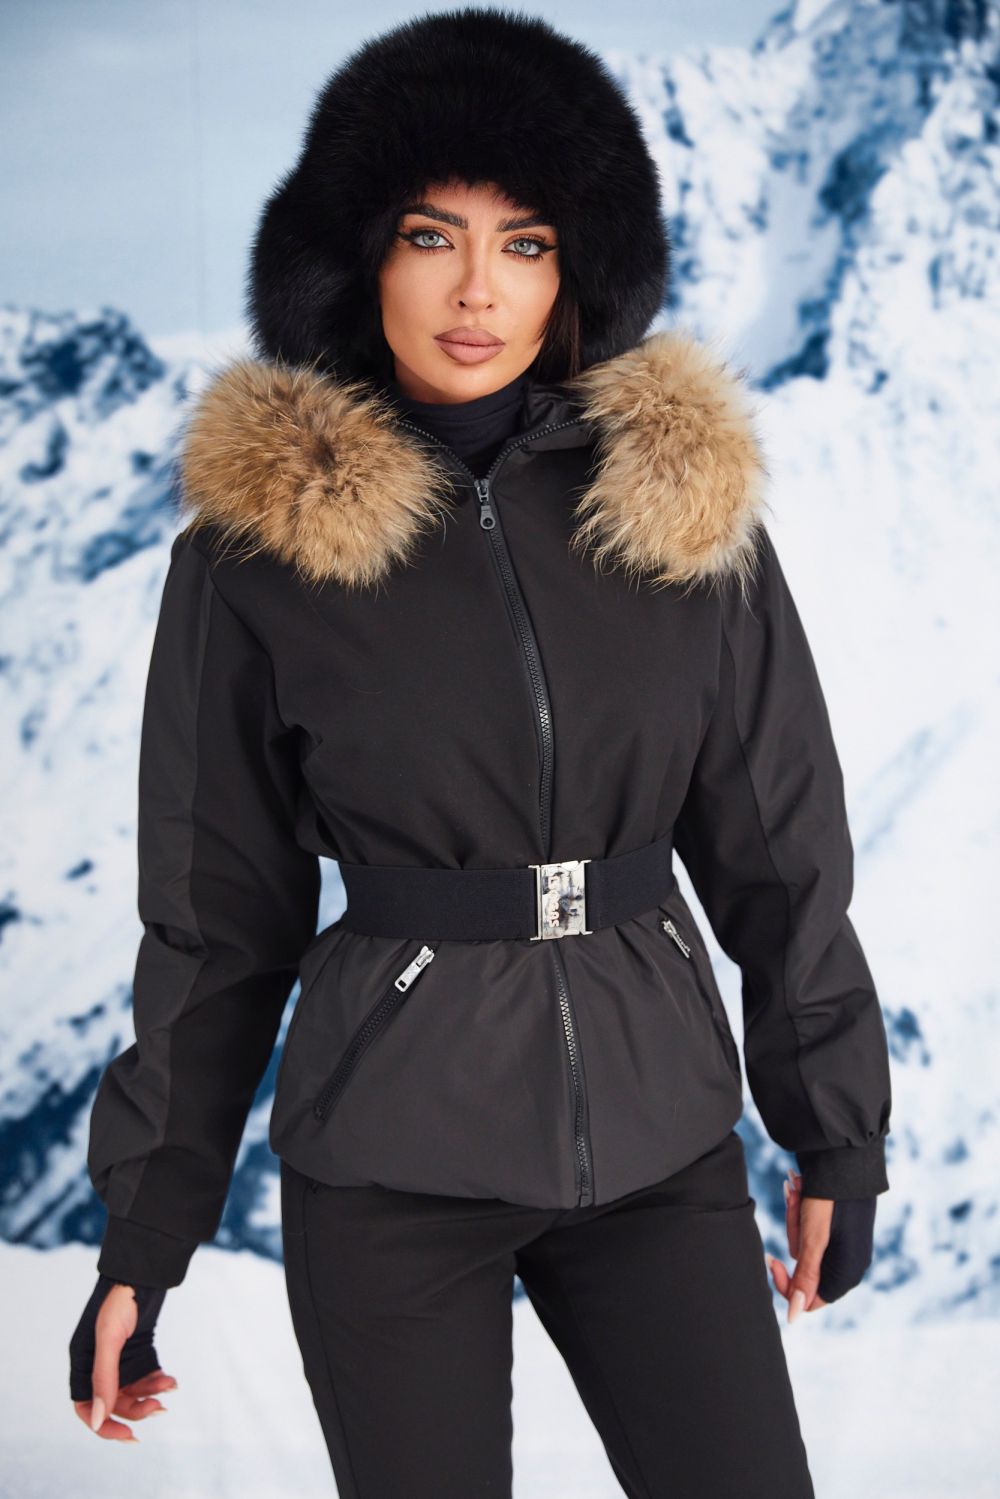 Black ski jacket for women Prenoms Bogas